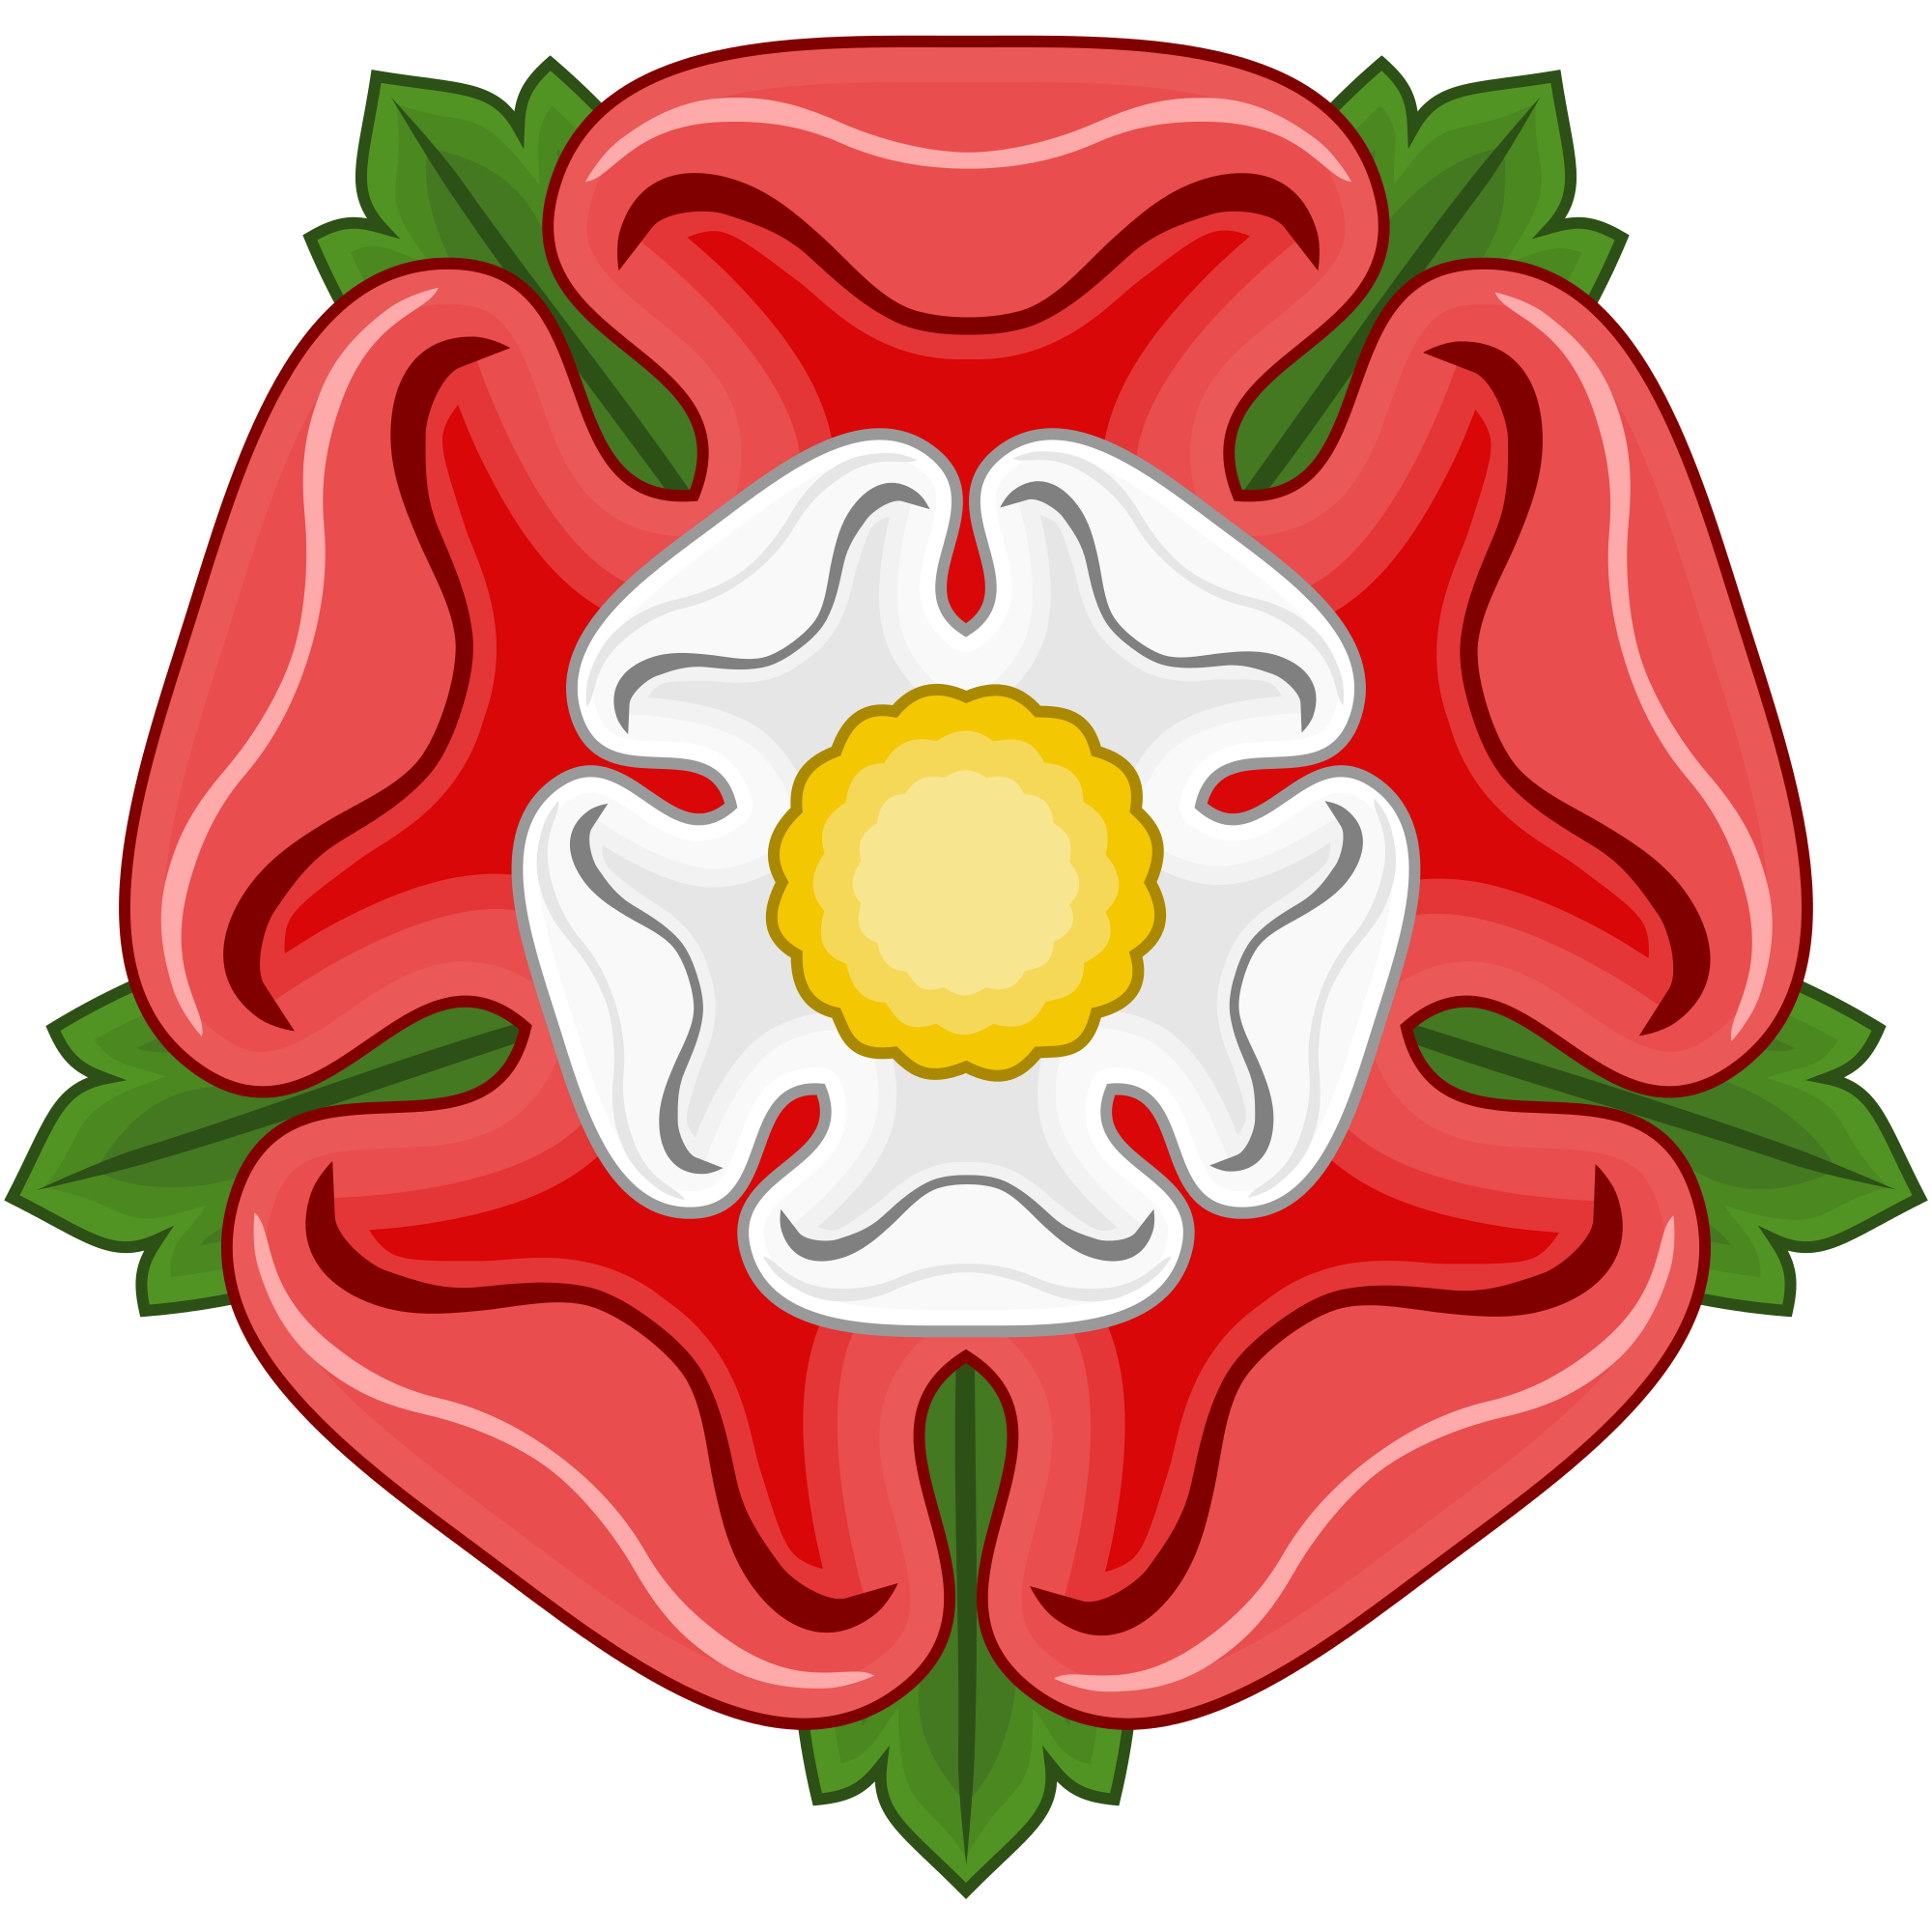 Tudor rose - Wikipedia, the free encyclopedia